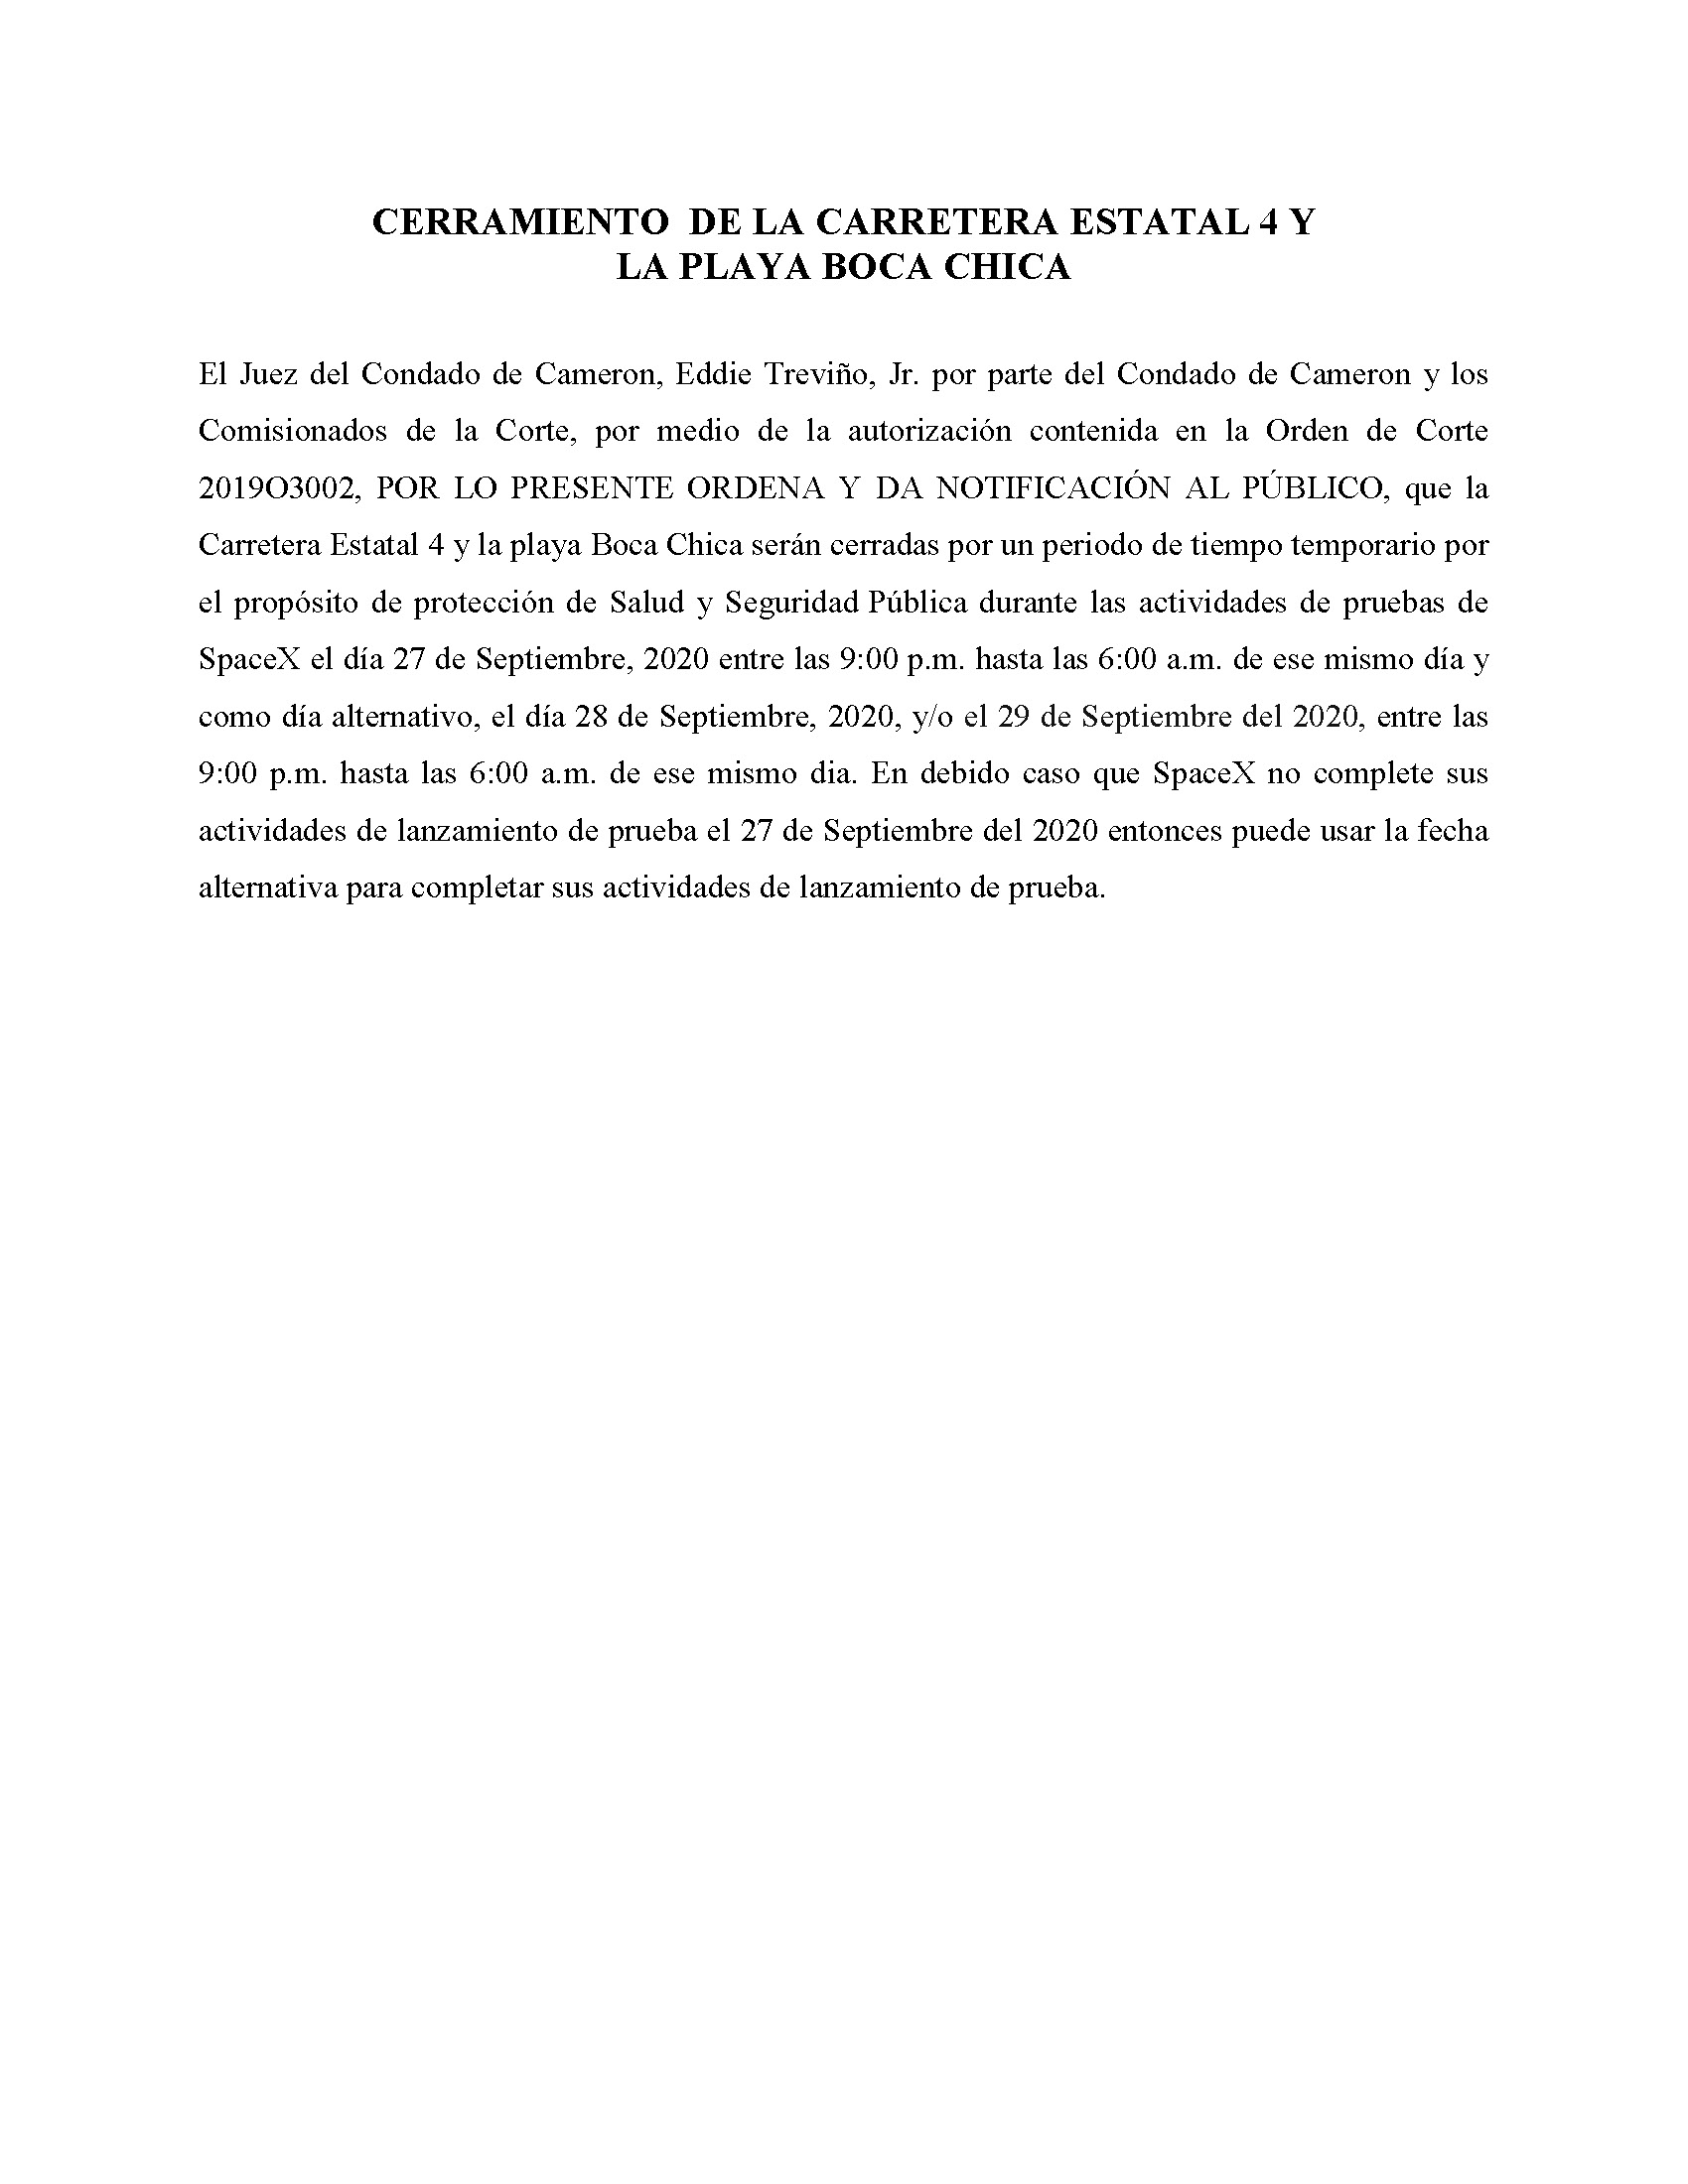 ORDER.CLOSURE OF HIGHWAY 4 Y LA PLAYA BOCA CHICA.SPANISH.9.27.20